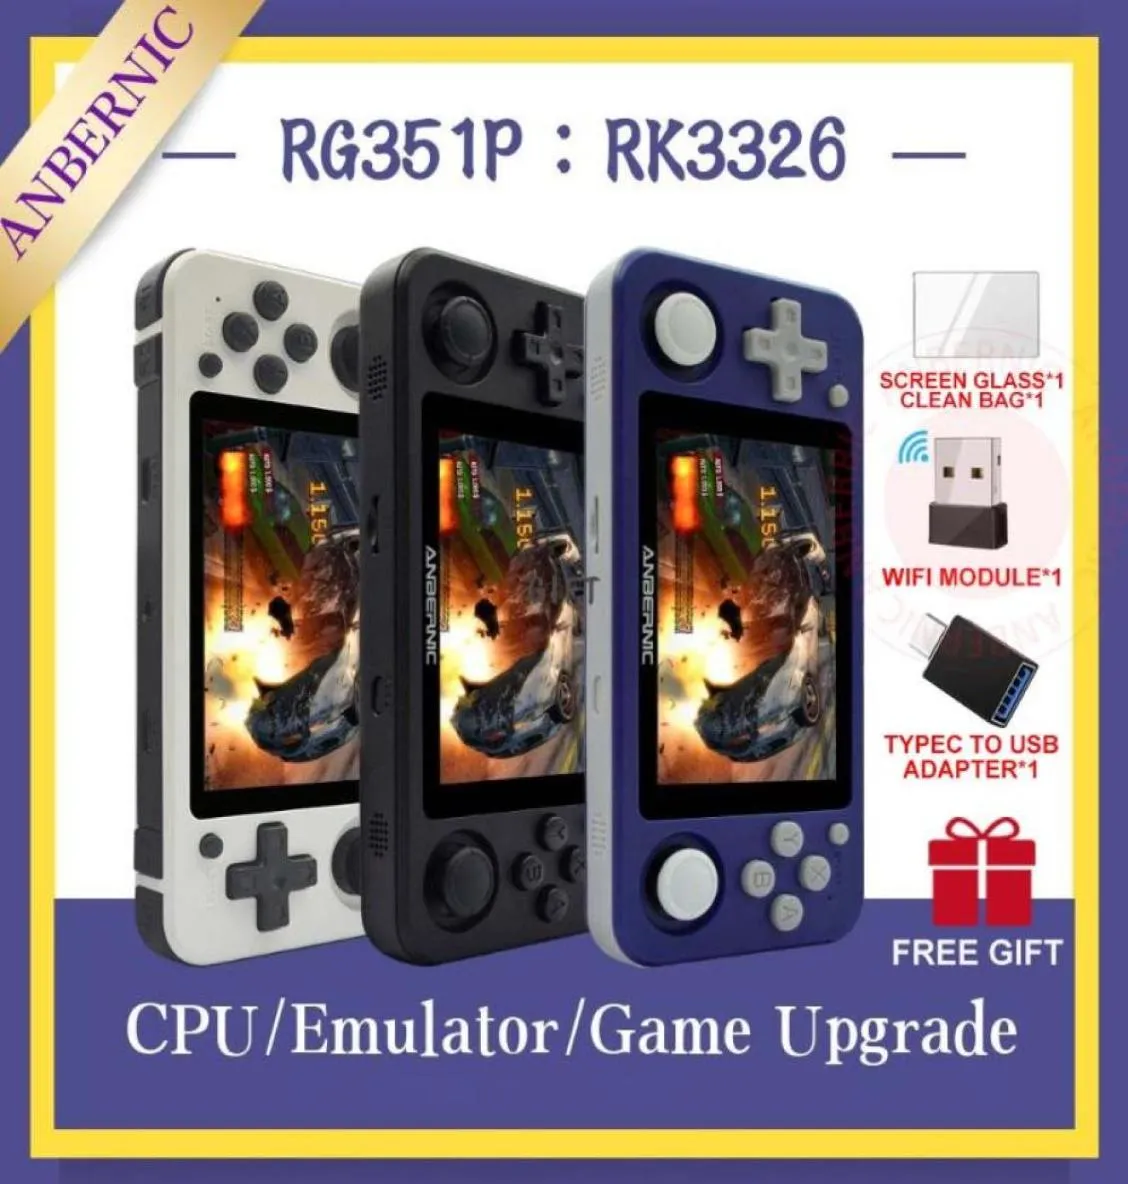 Portabla spelspelare RG351P Anbernic Retro Console RK3326 Linux System PC Shell PS1 Player Pocket RG351 Handheld3643016